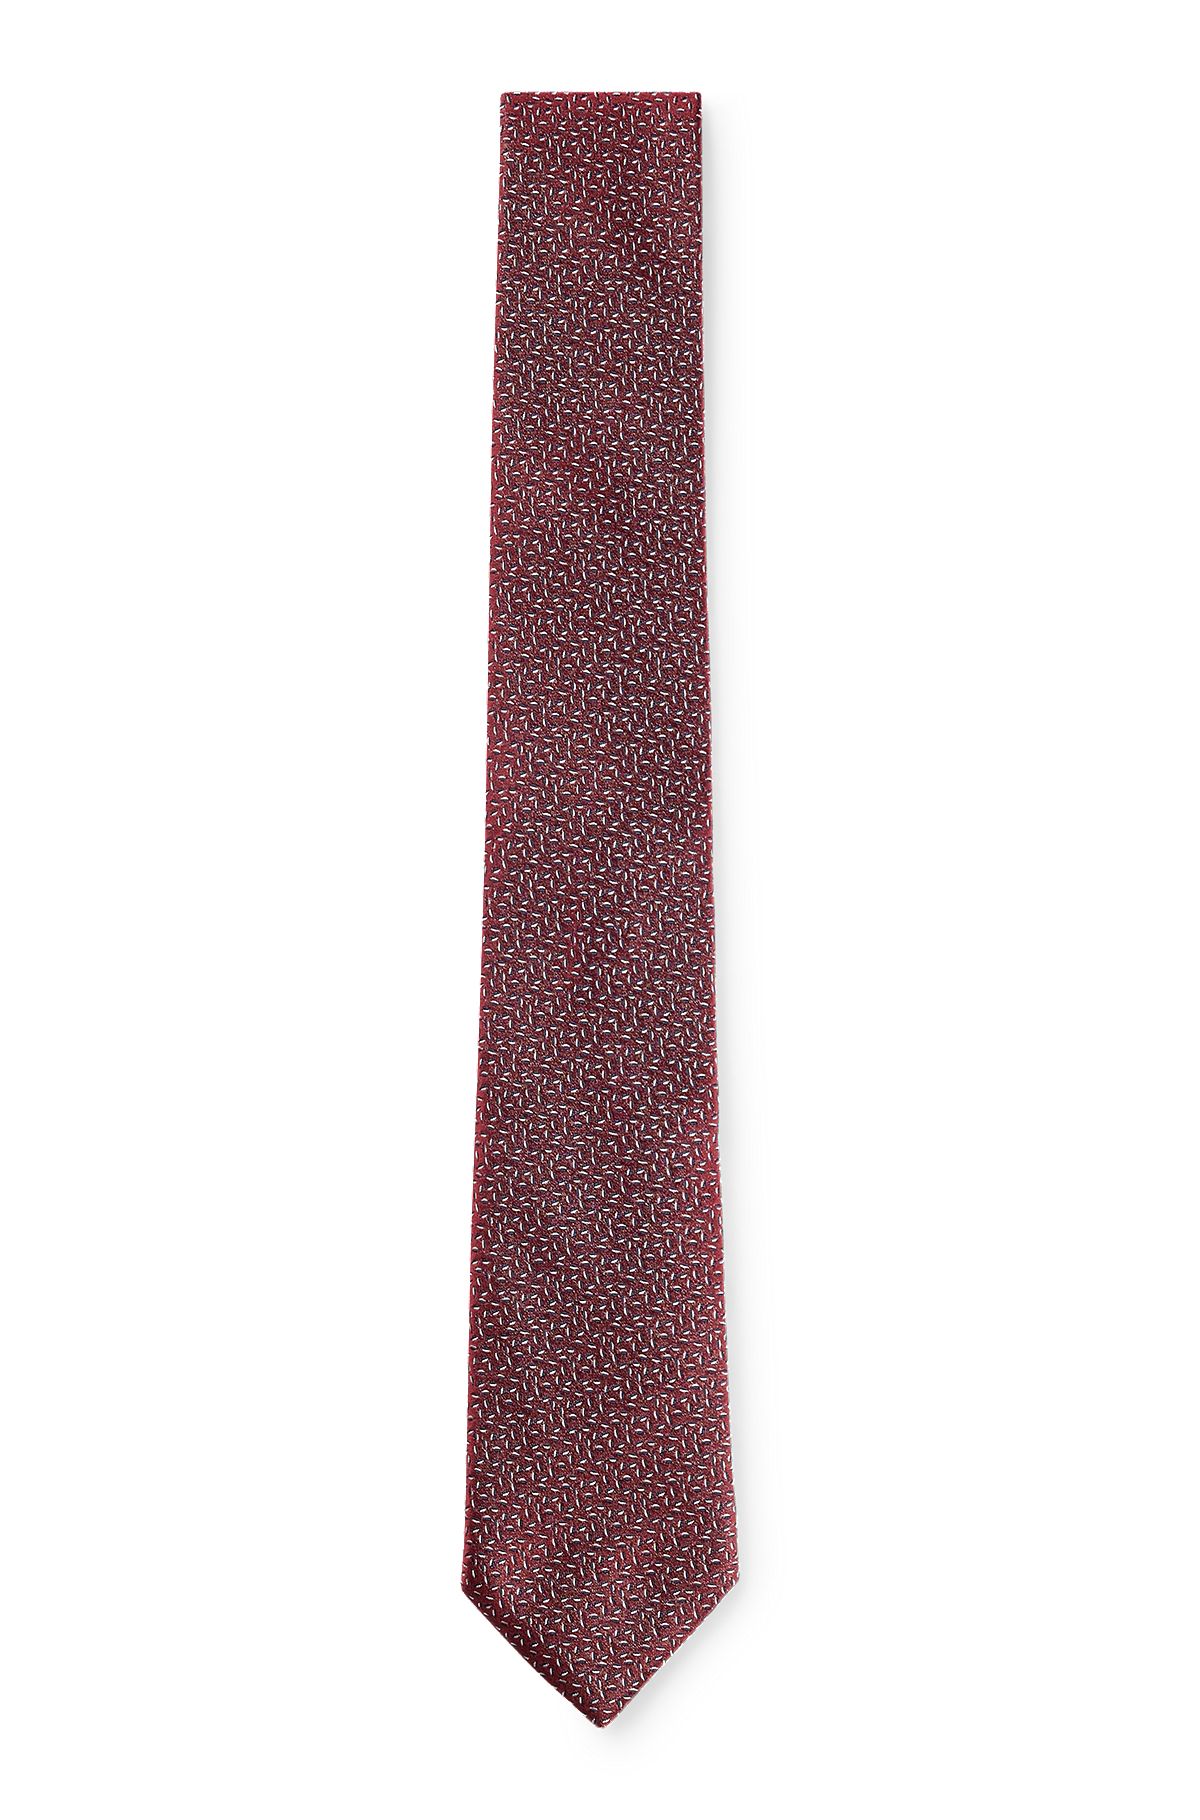 Gemusterte Krawatte aus reiner Seide, Rot